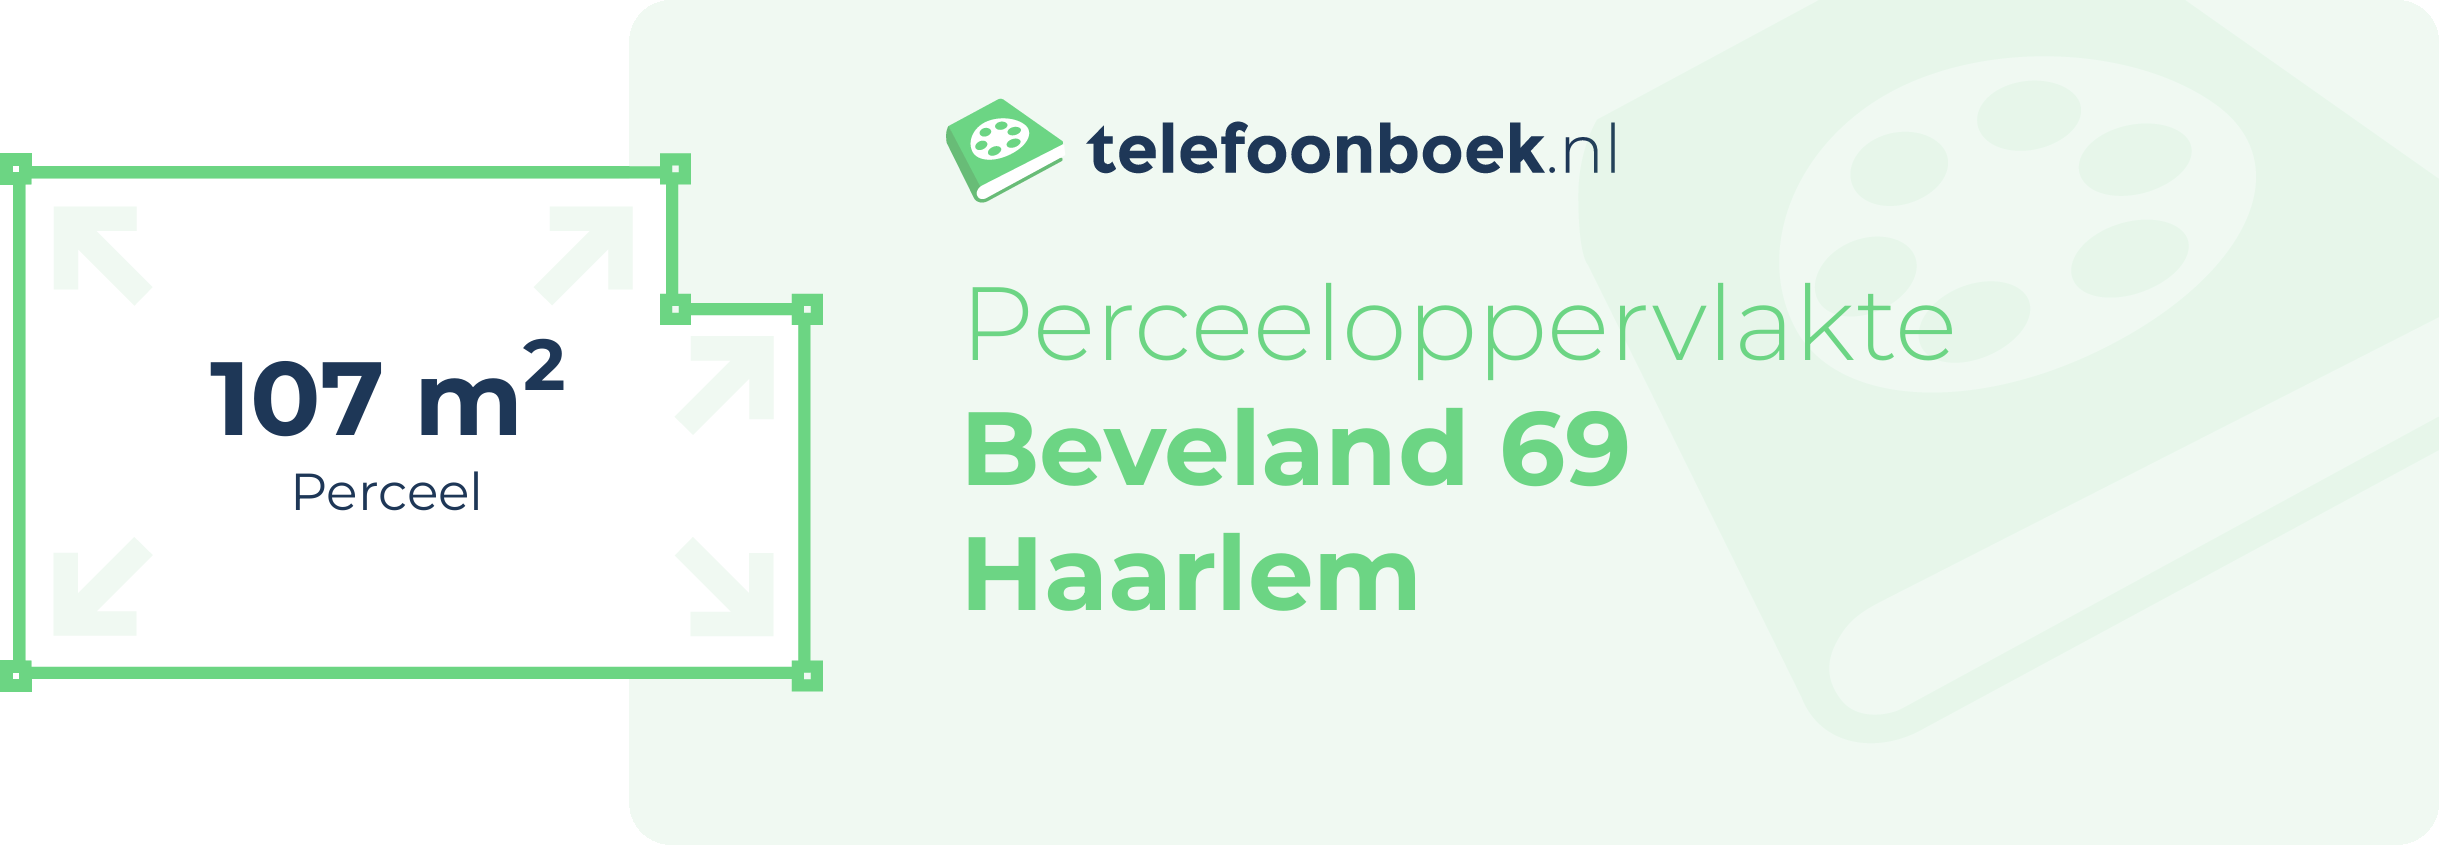 Perceeloppervlakte Beveland 69 Haarlem